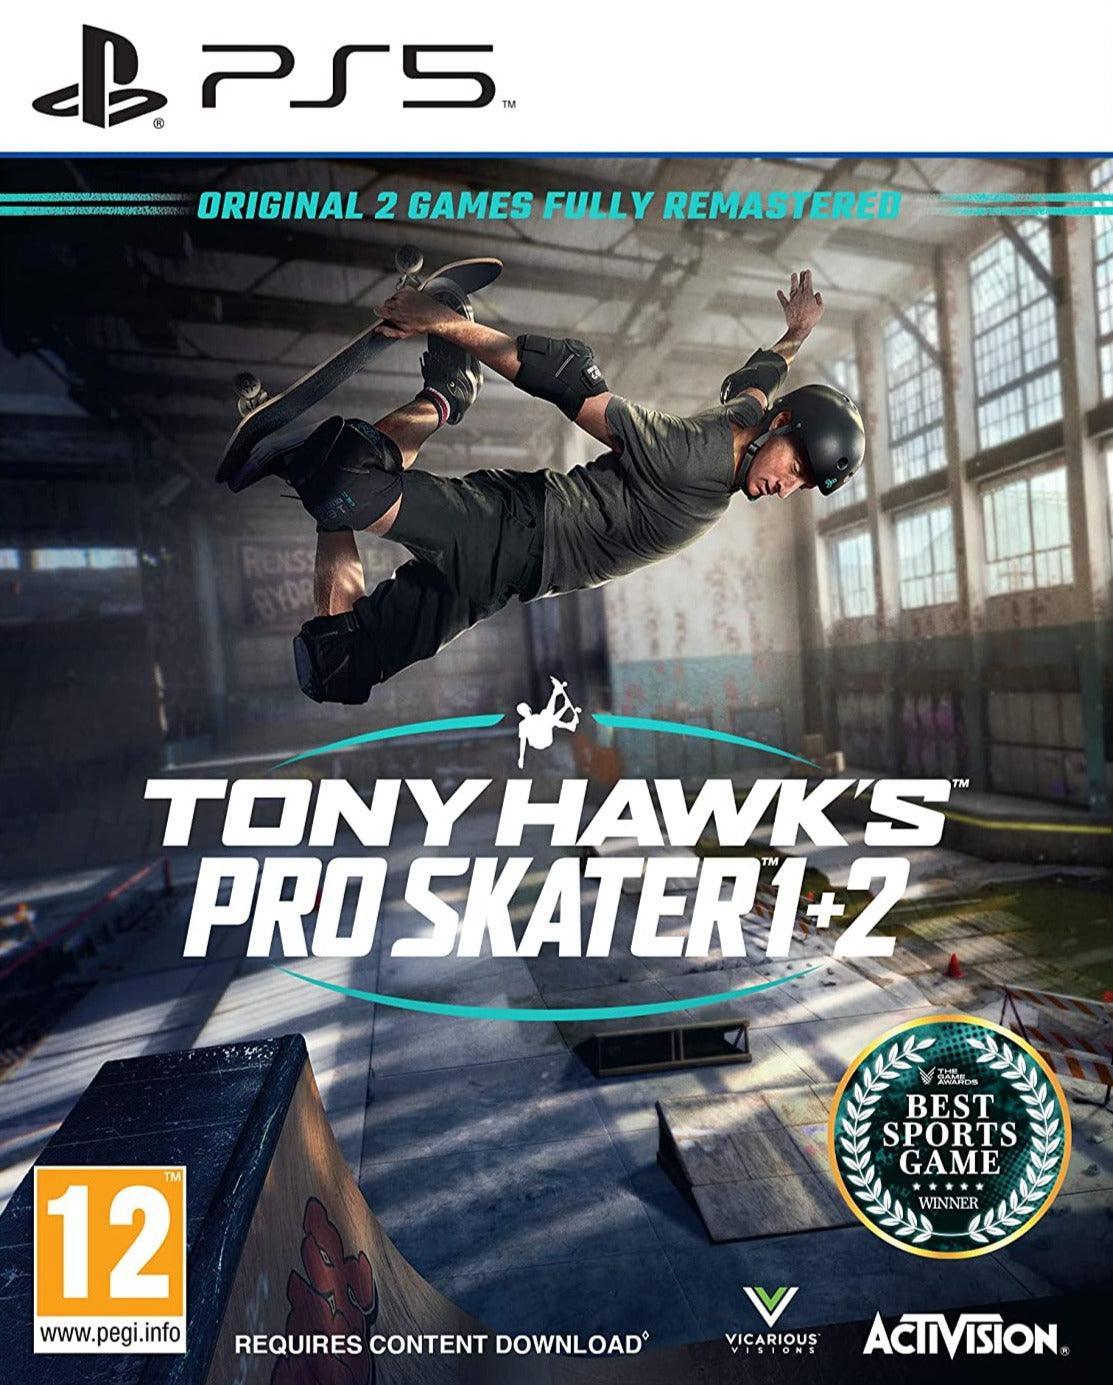 Tony Hawks Pro Skater 1+2 / PS5 / Playstation 5 - GD Games 